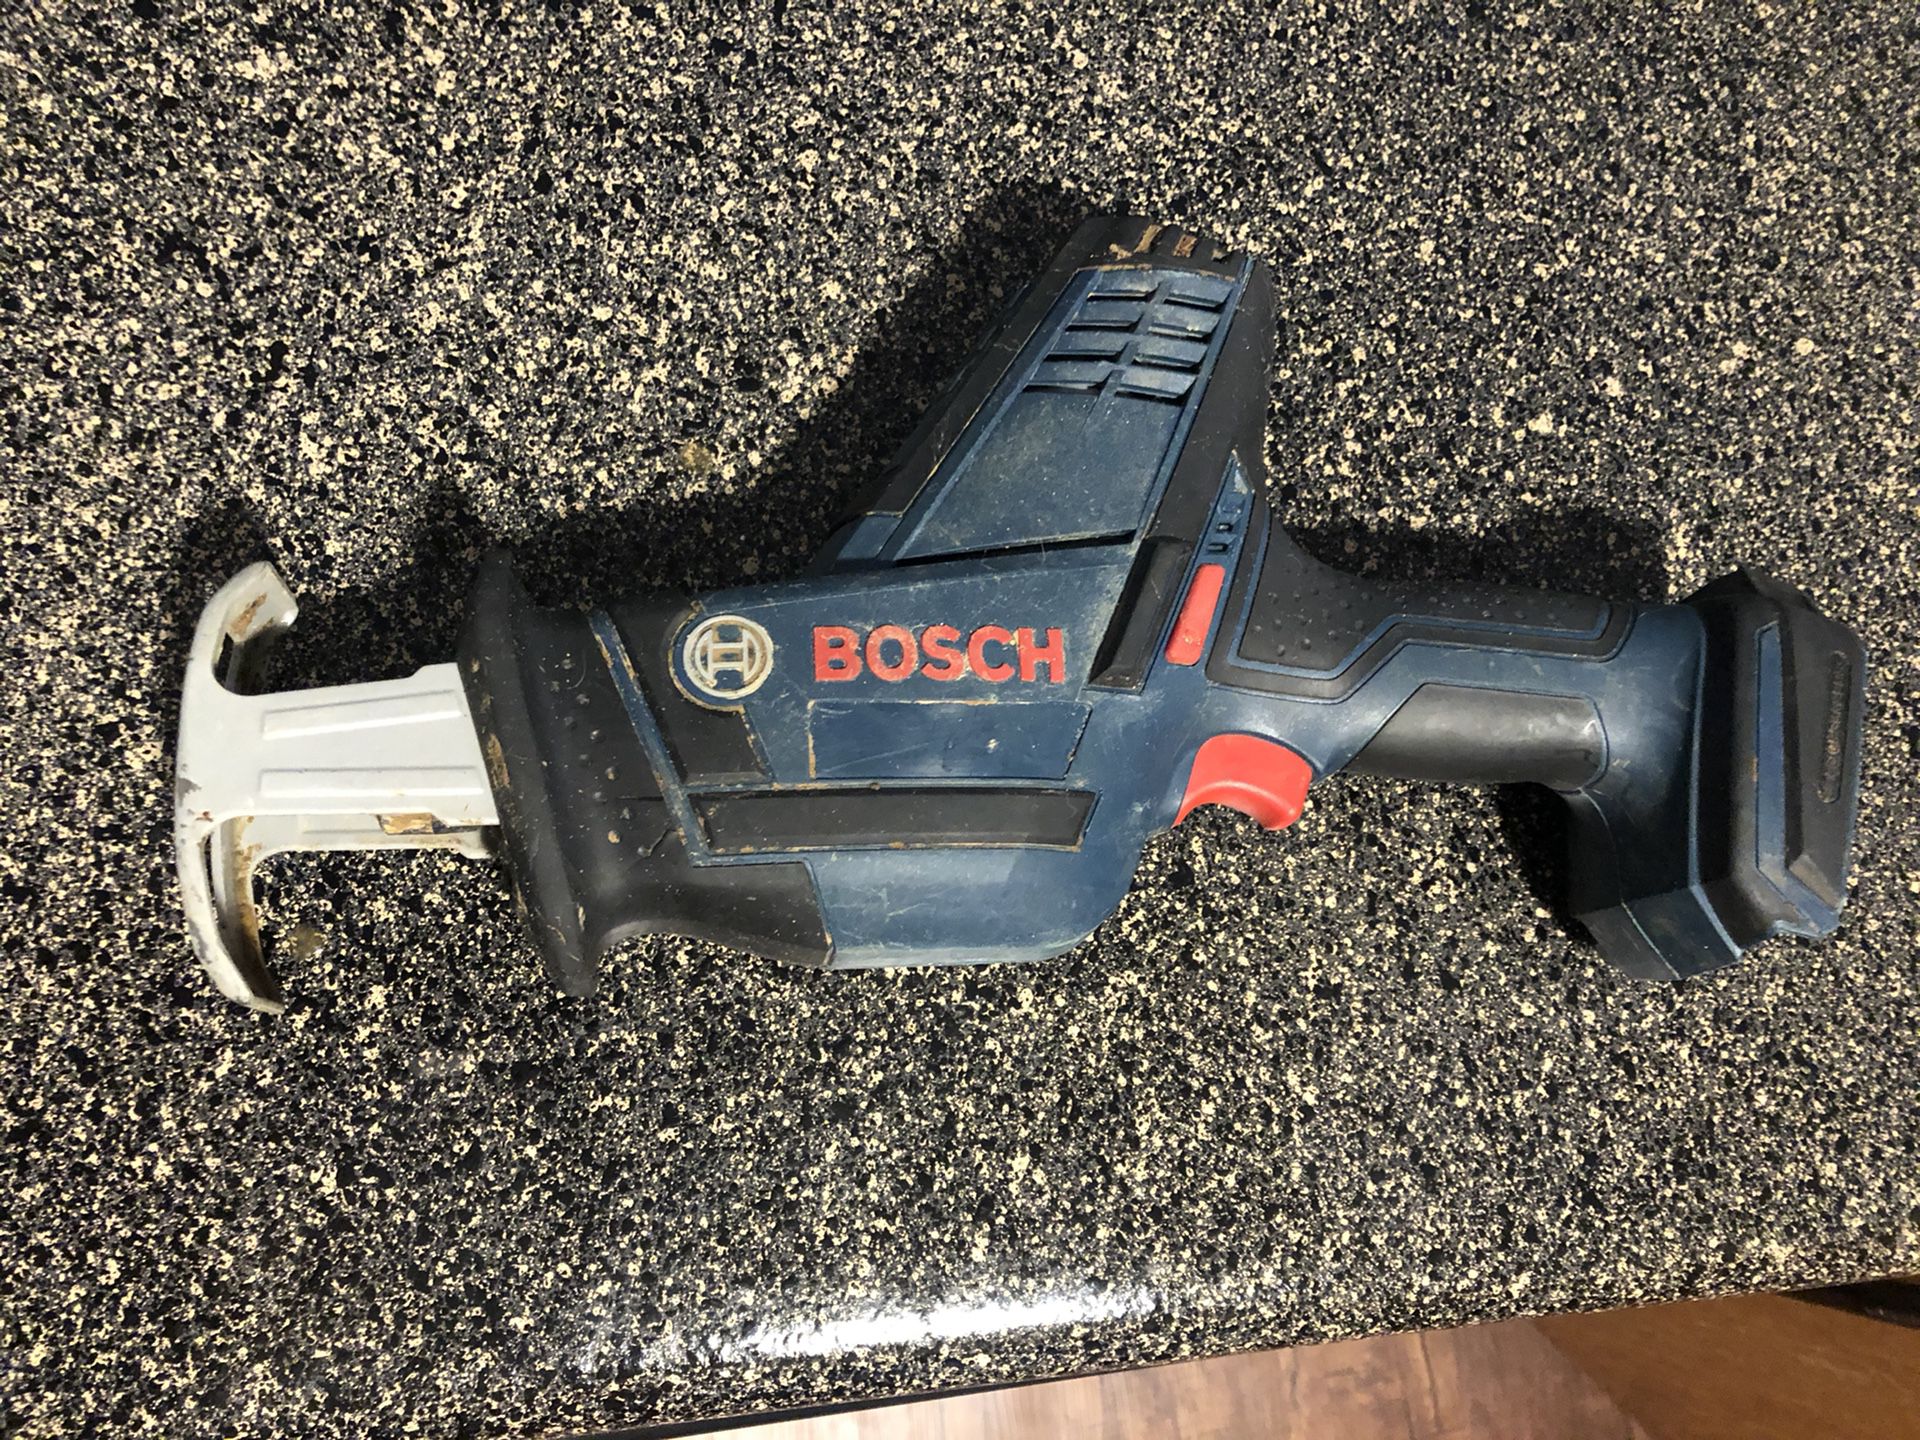 Bosch Cordless 18v Reciprocating Saw